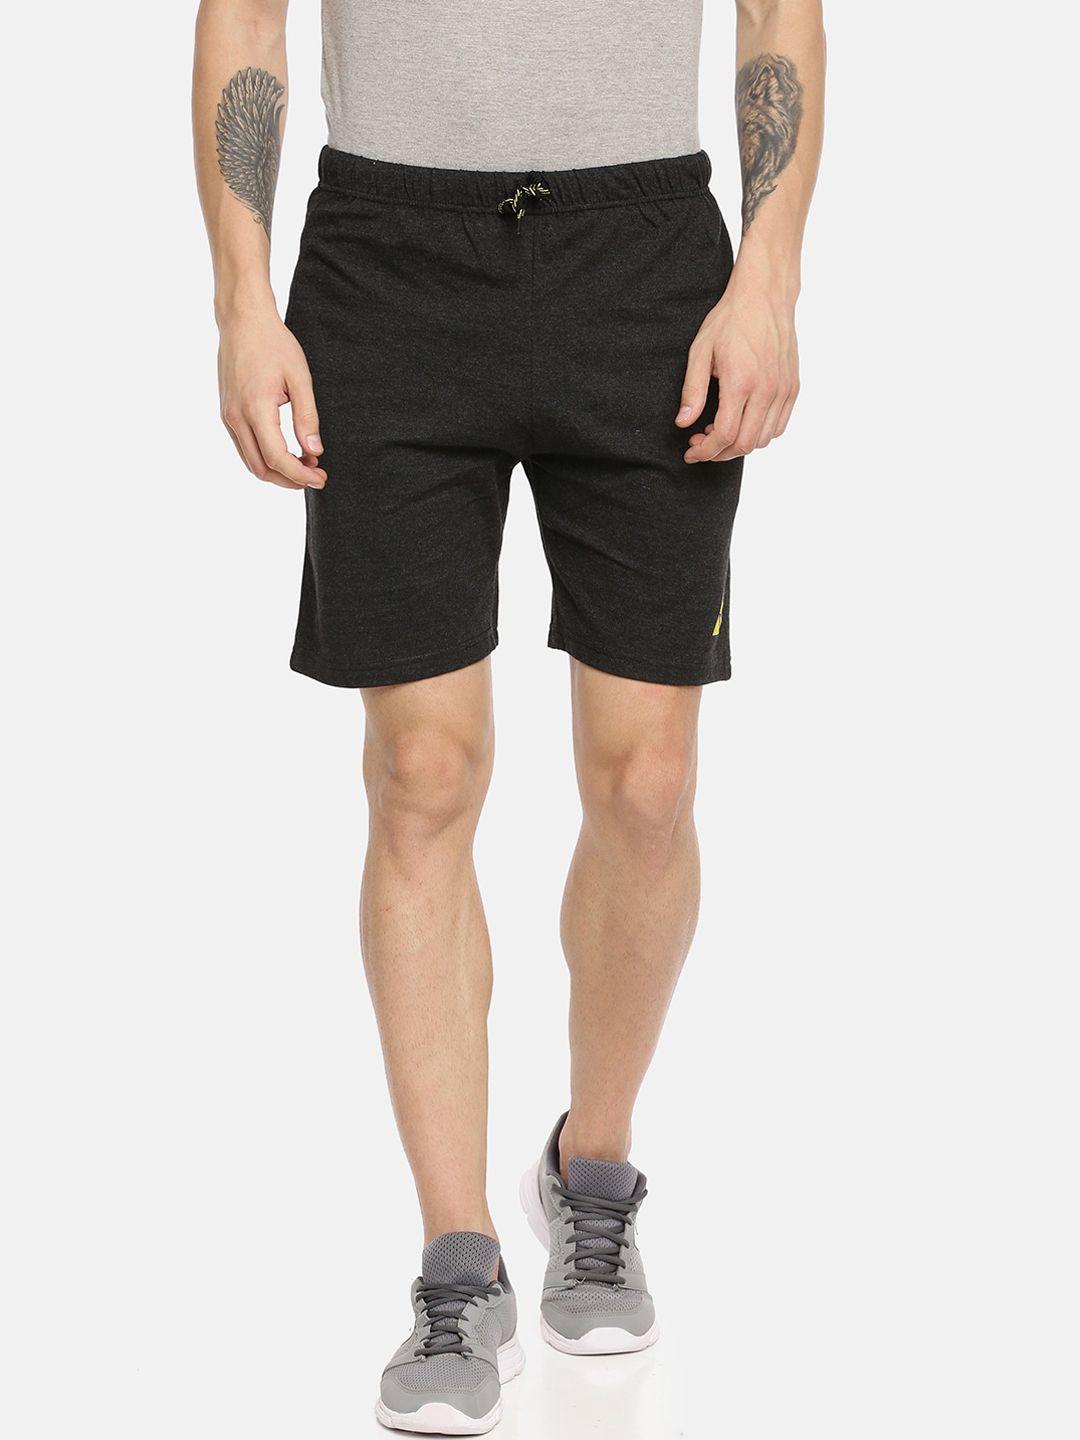 ardeur-men-charcoal-grey-cotton-sports-shorts